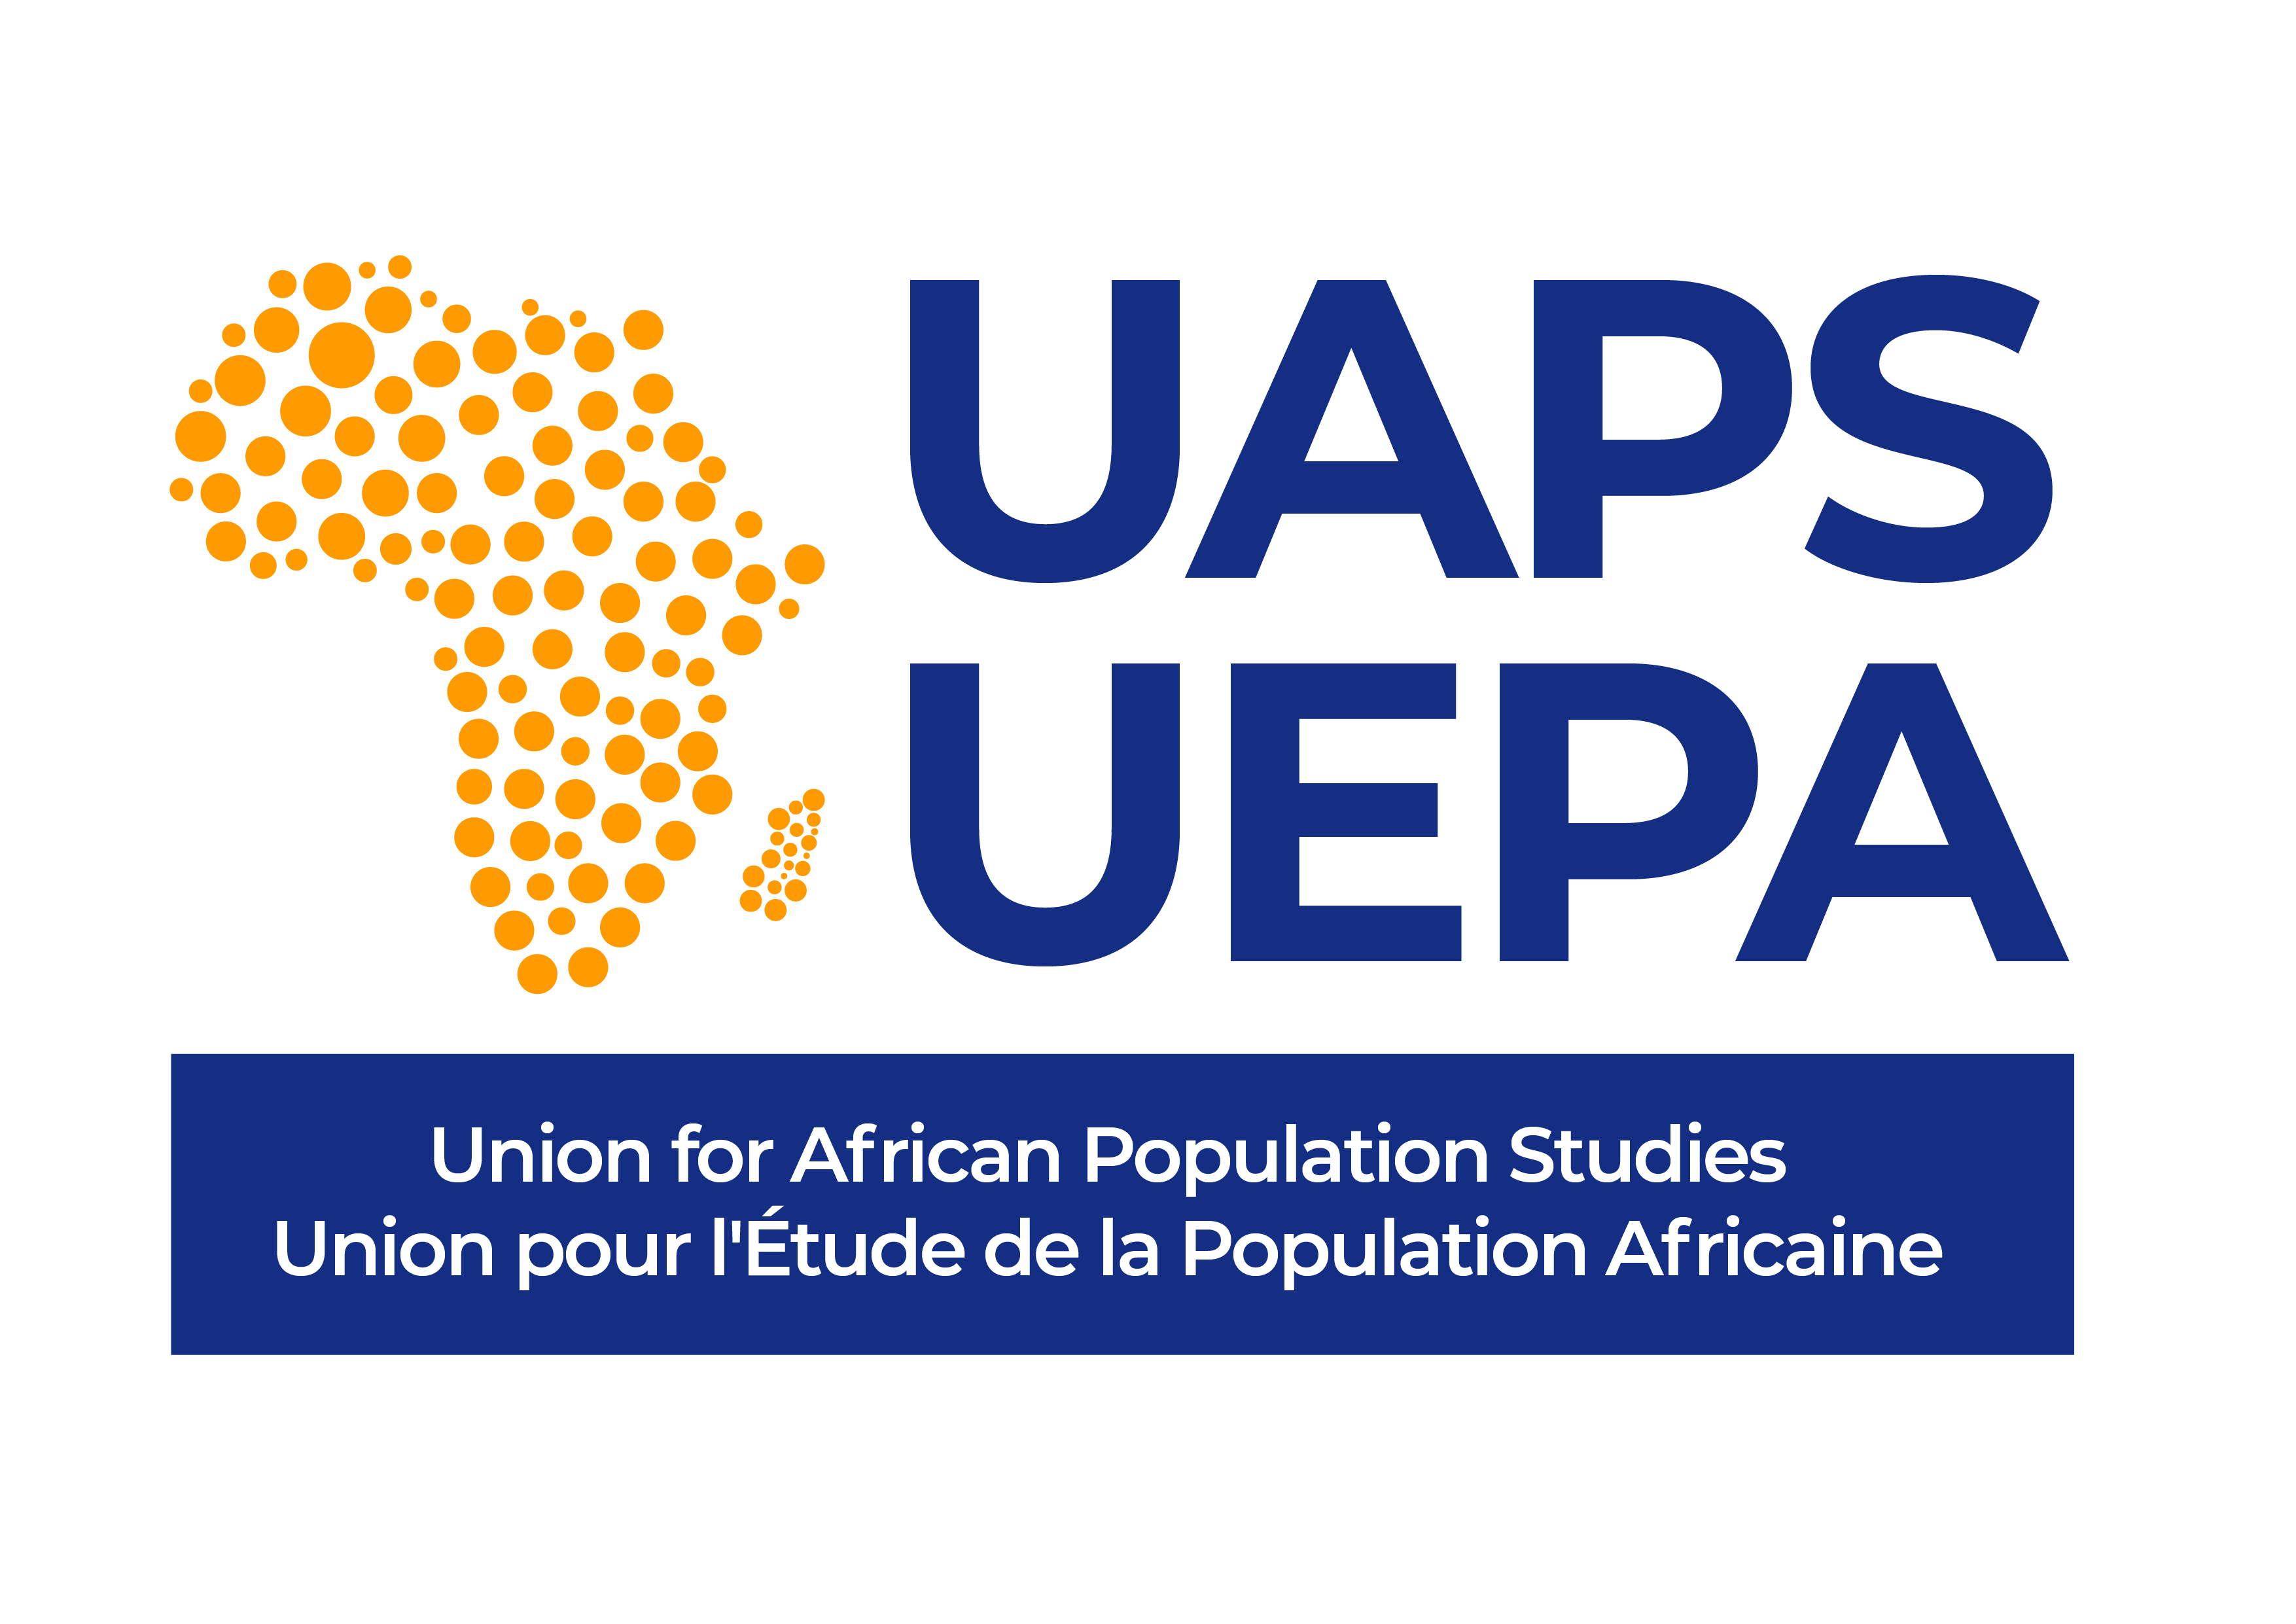 Union for African Population Studies (UAPS)